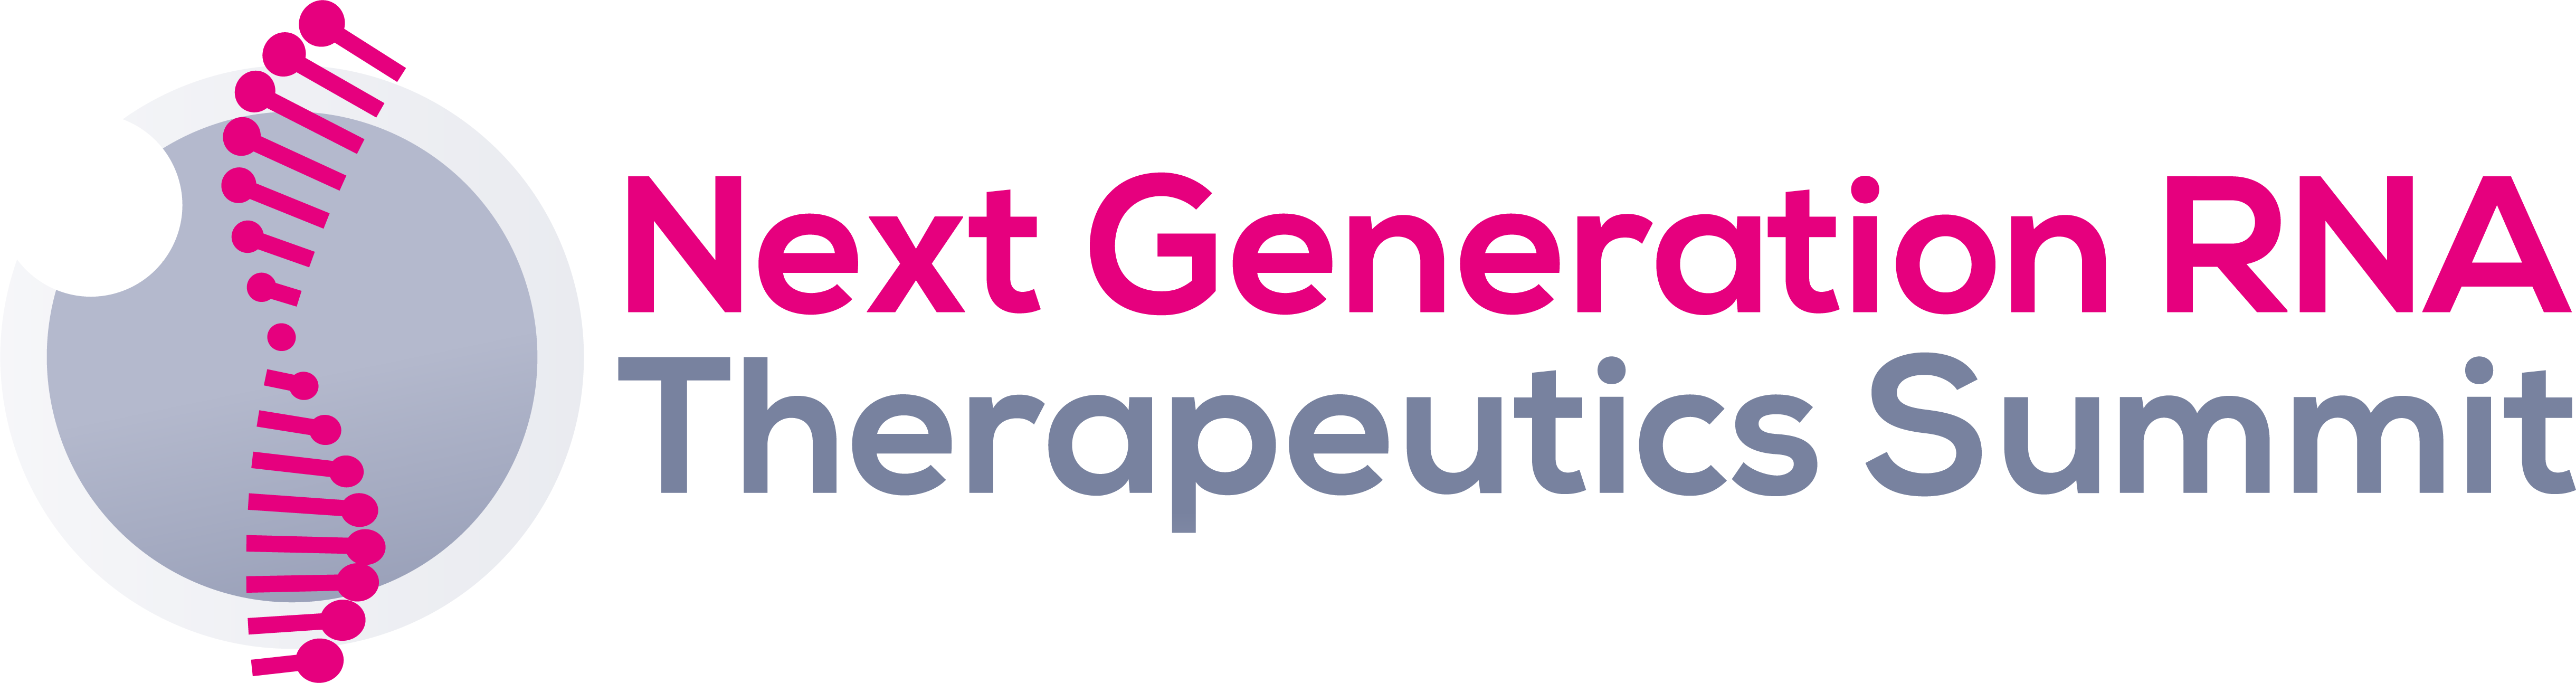 Next Generation RNA Therapeutics summit logo